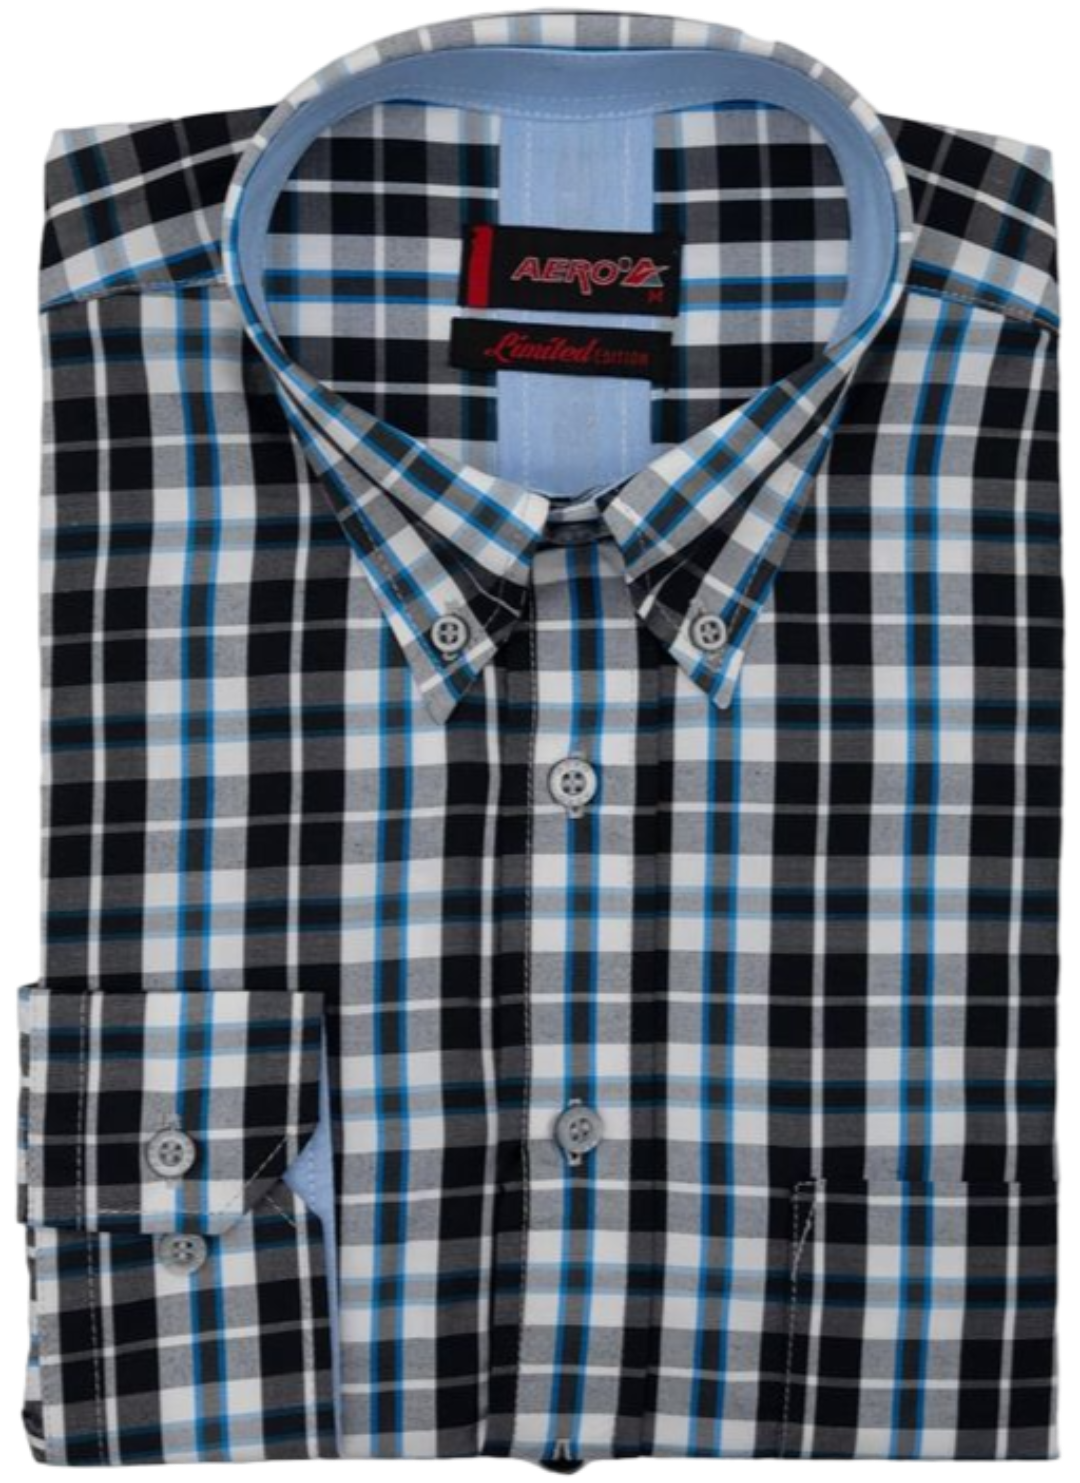 Aero Black/Grey Check Long Sleeve Shirt